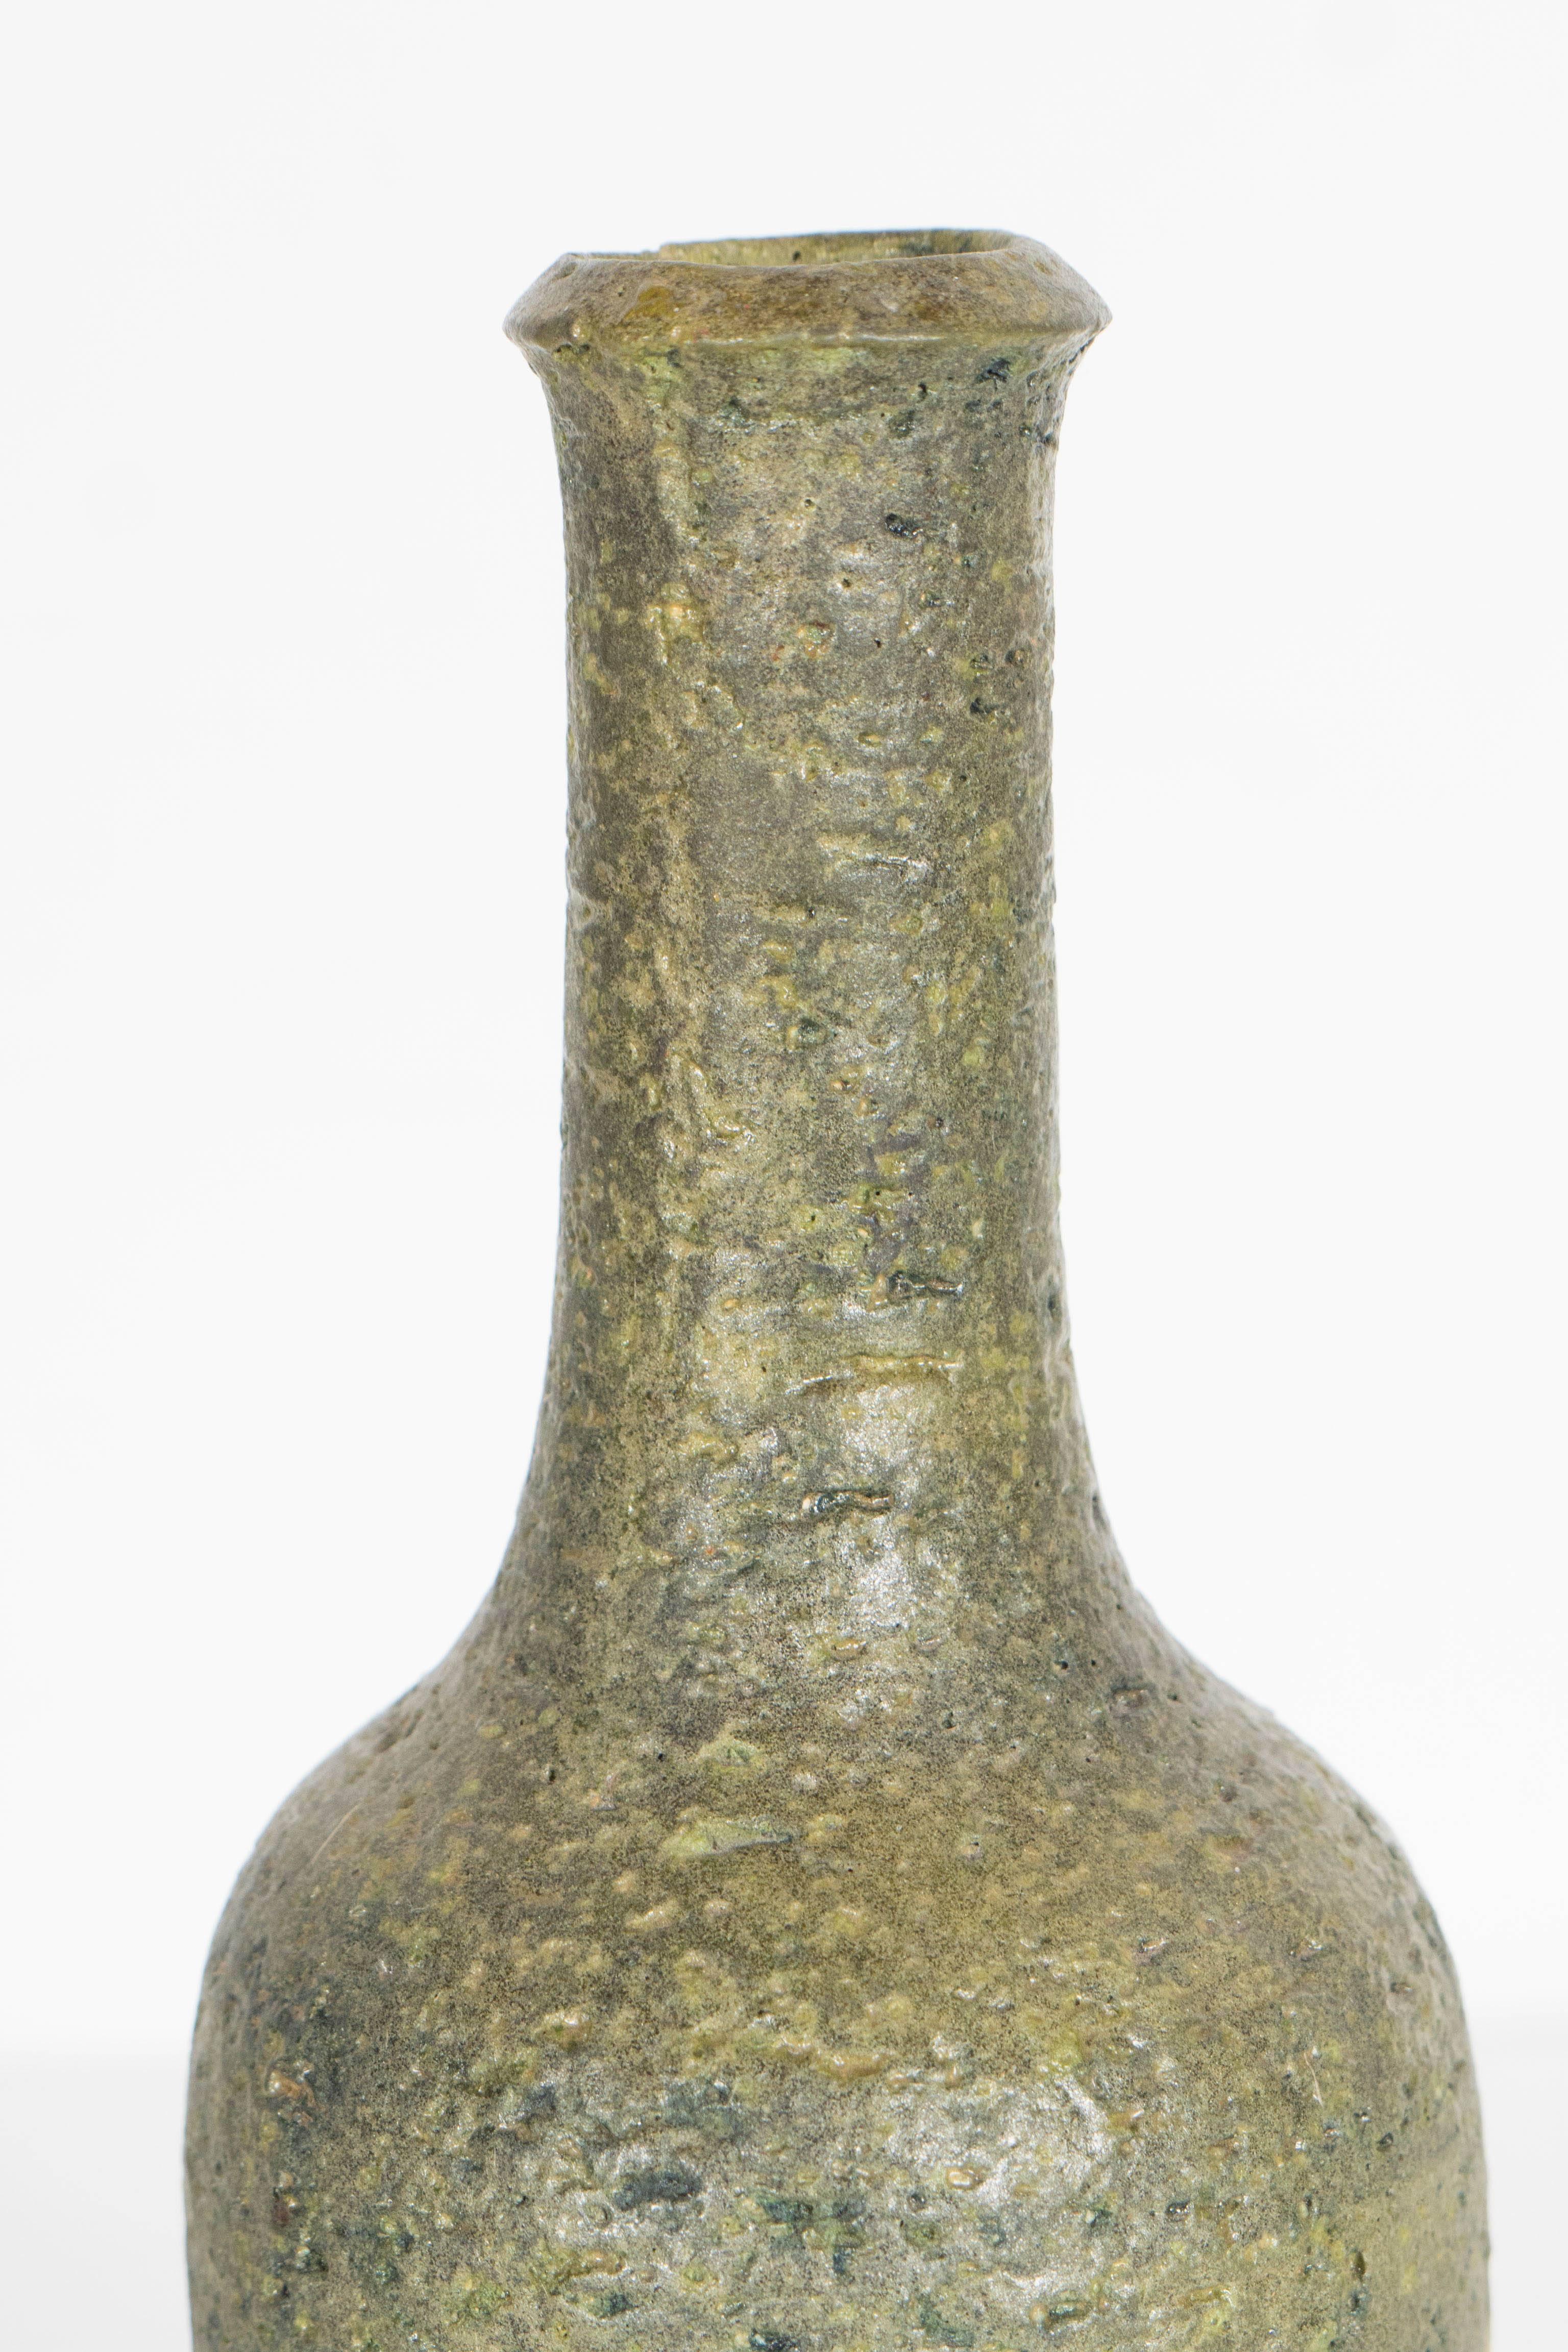 Italian Attractive Bottle Vase in Organic Tones by Marcello Fantoni for Raymor